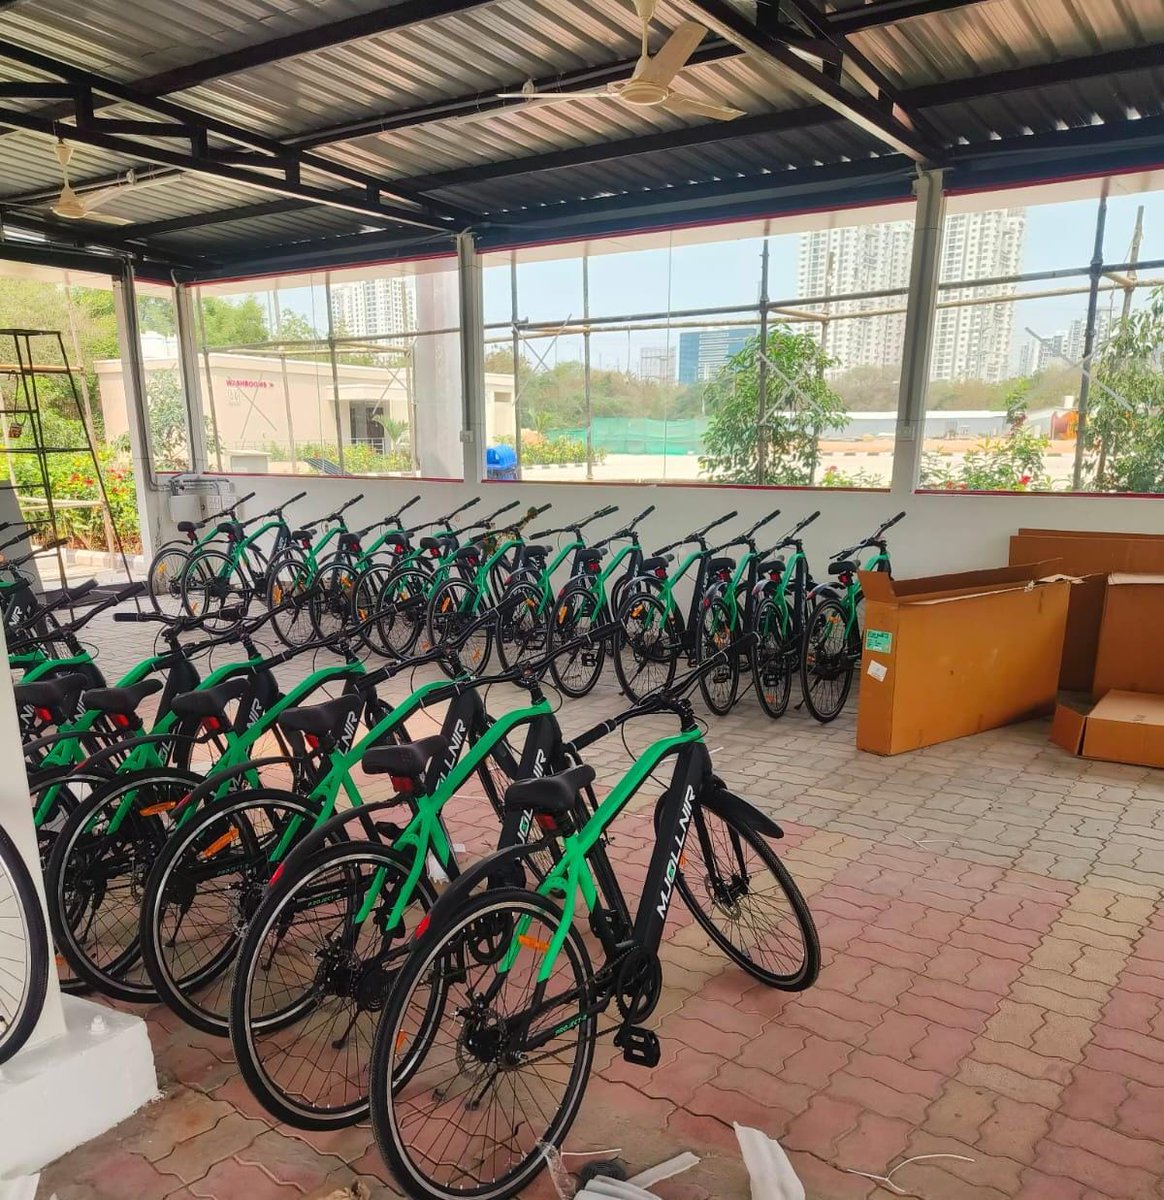 Thanks to @md_hgcl @HMDA_Gov @healthway11023 for installing Rent Bicycles at #HyderabadCyclingTrack #HyderabadCyclingRevolution @HydcyclingRev @TelanganaCMO @sselvan @HiHyderabad @anusha_puppala @RajaniAmisha @rahulvpisharody @HYDTrafficMan @Team_Road_Squad @ErikSolheim